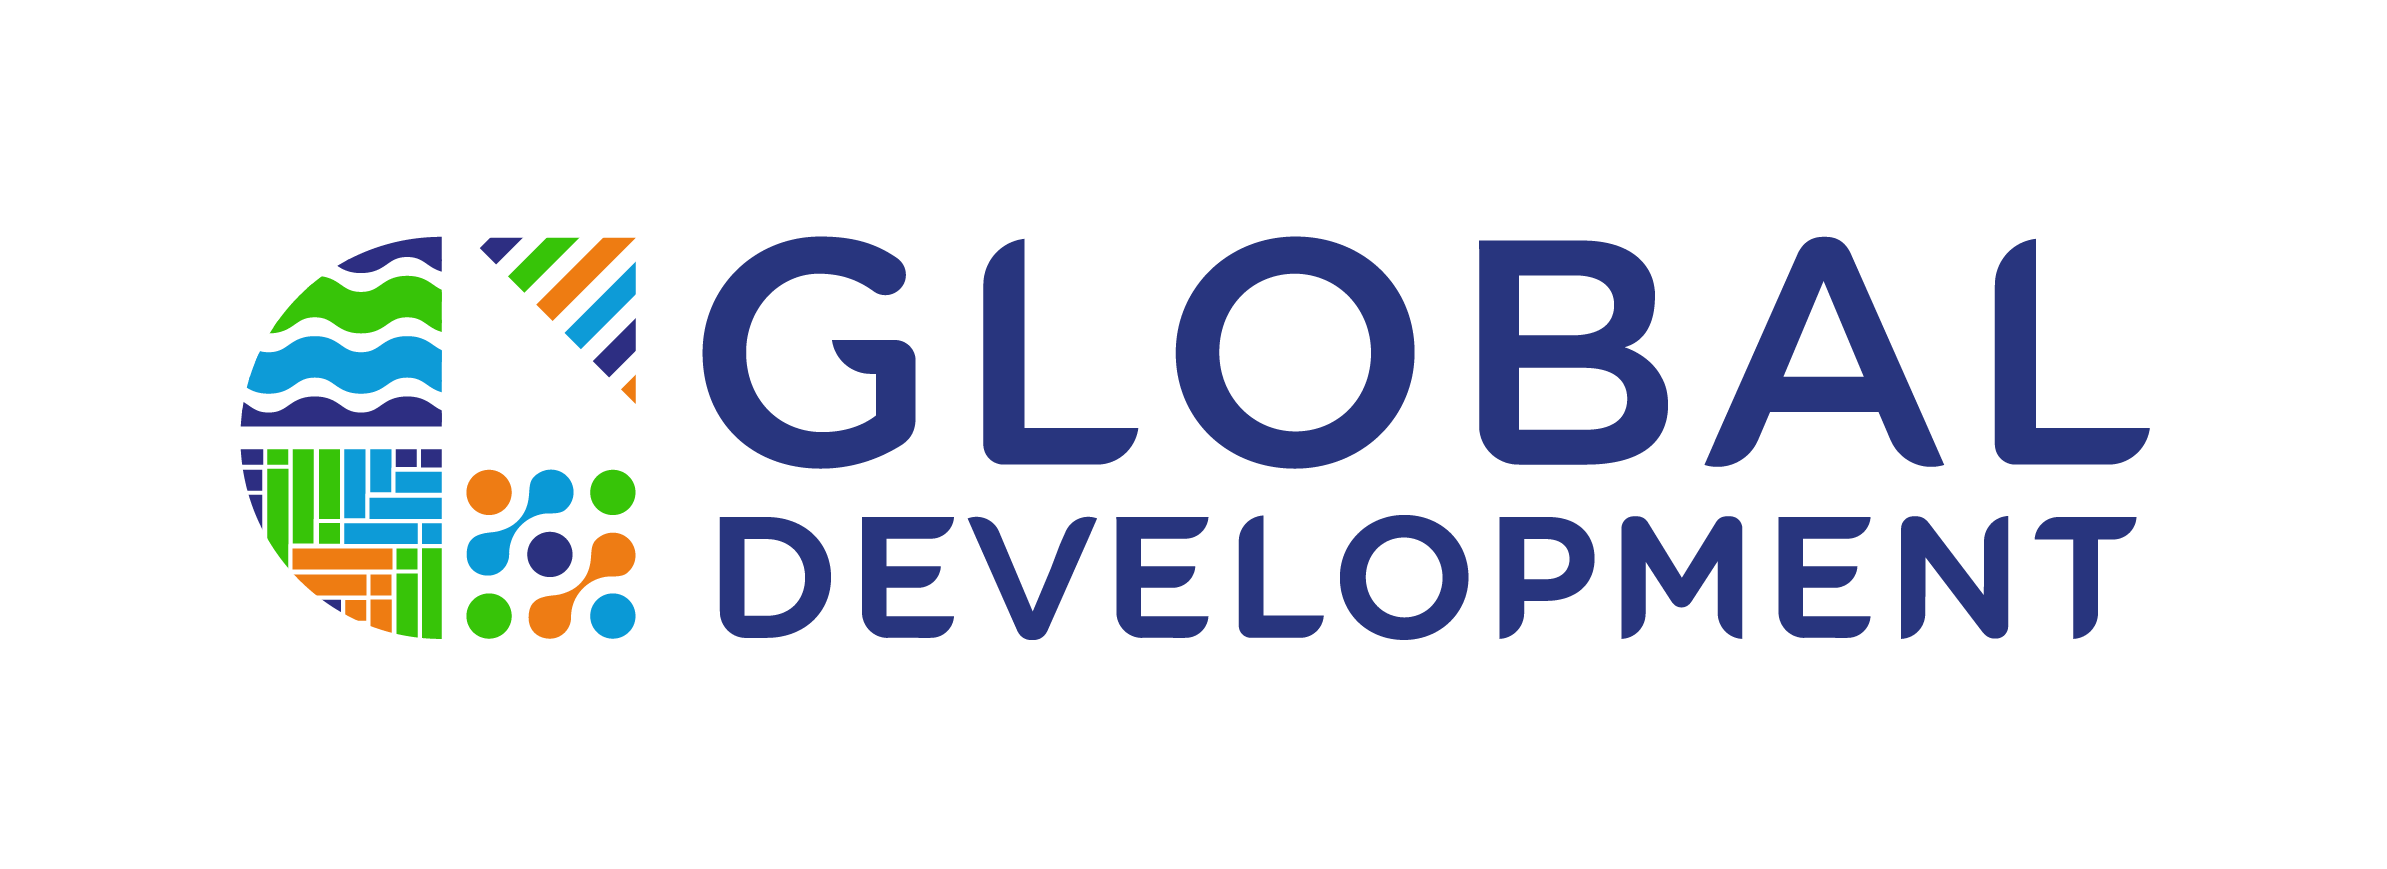 Desenvolvimento global